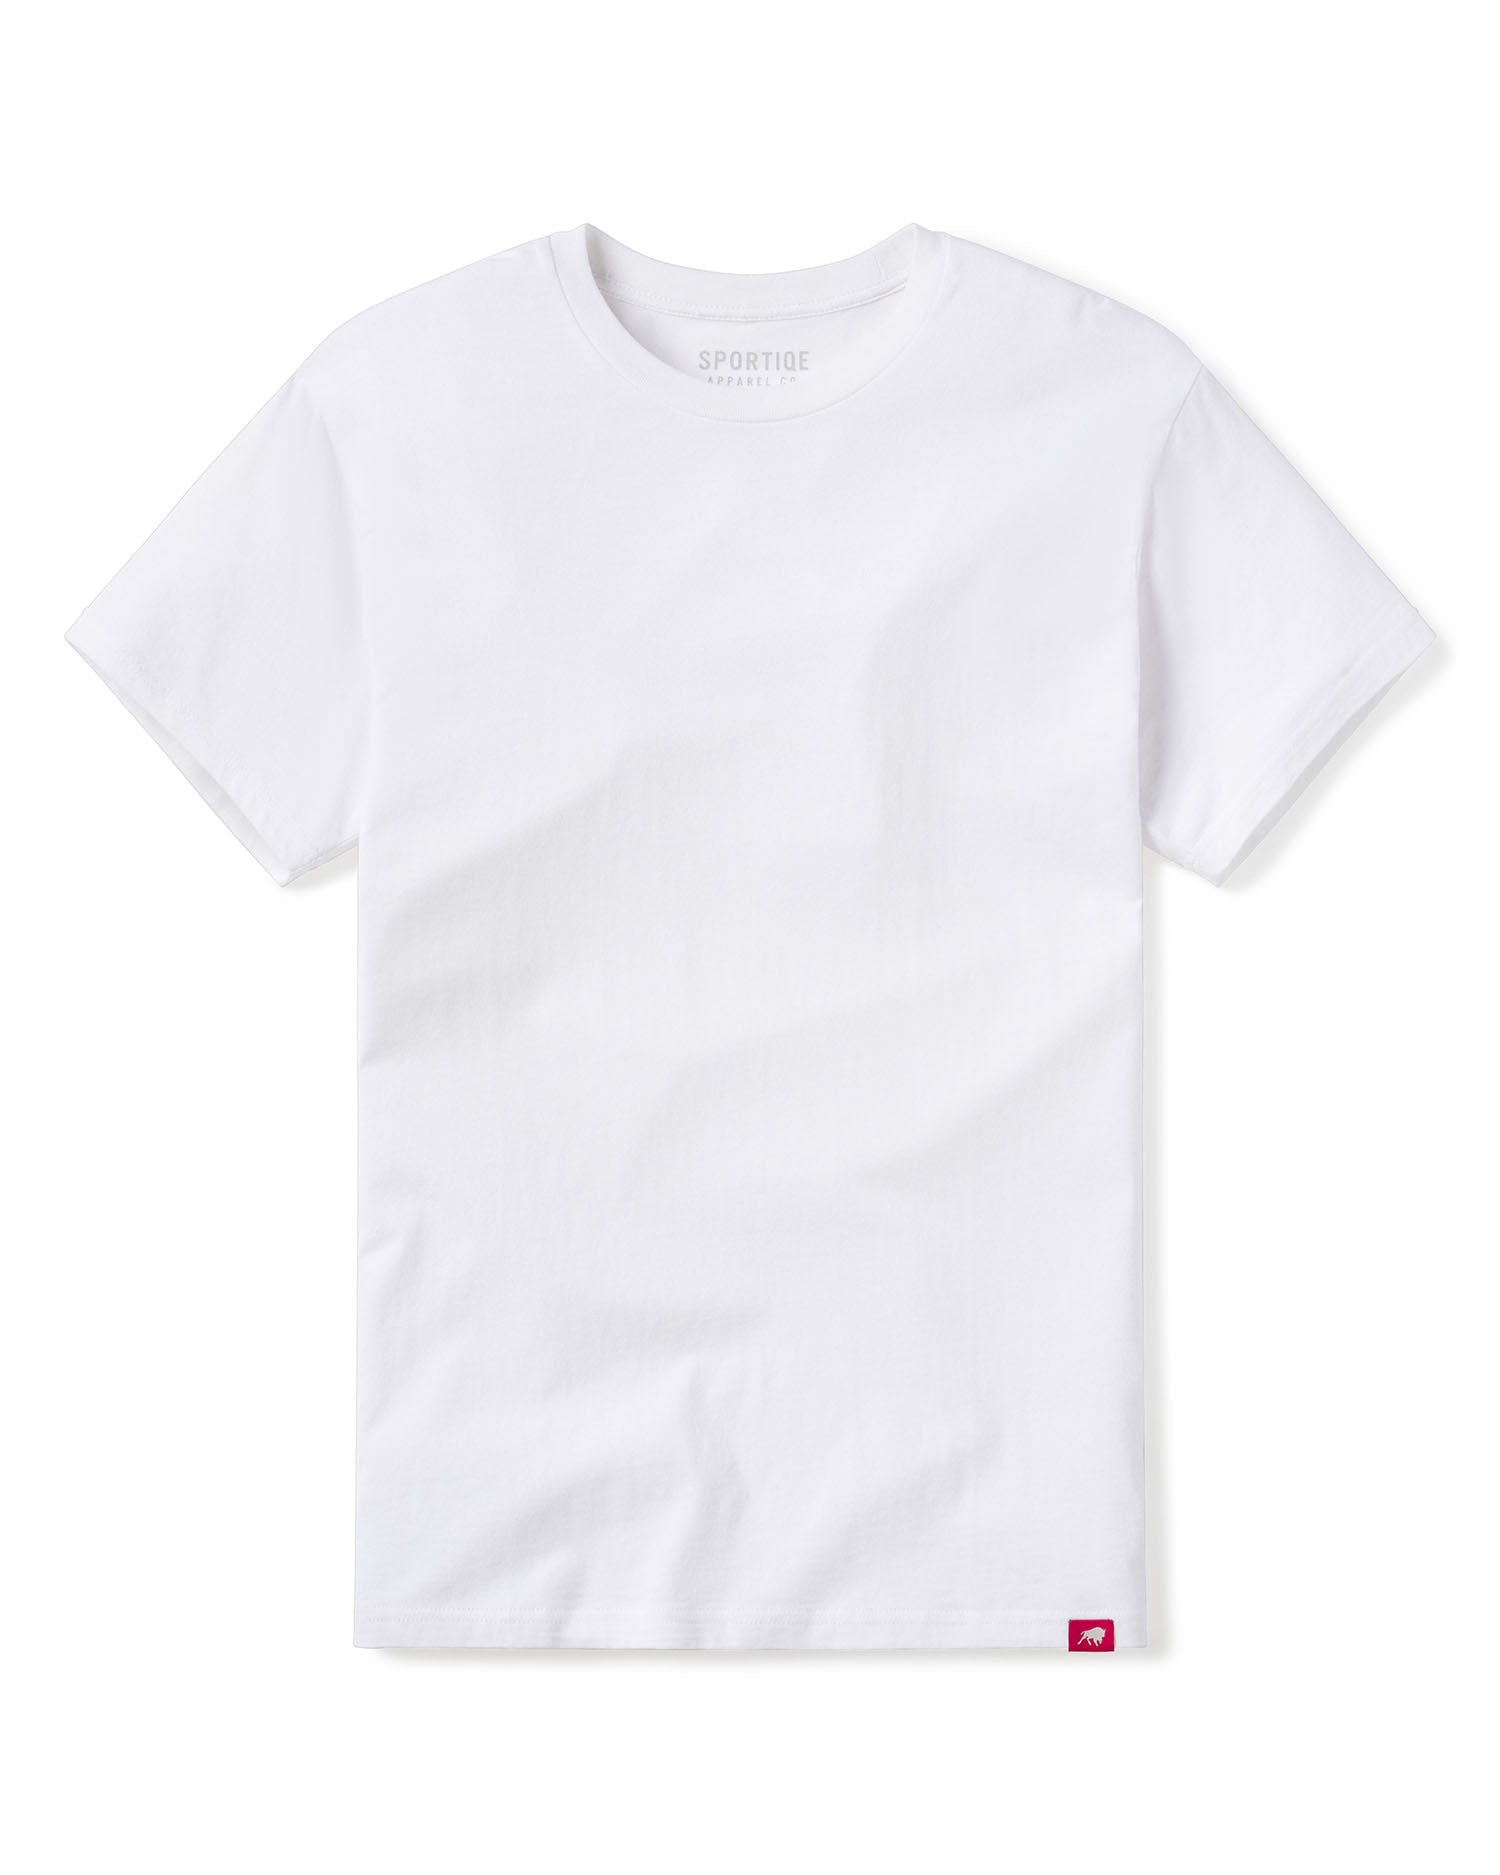 Sportiqe La Kings Comfy Long Sleeve T-Shirt S